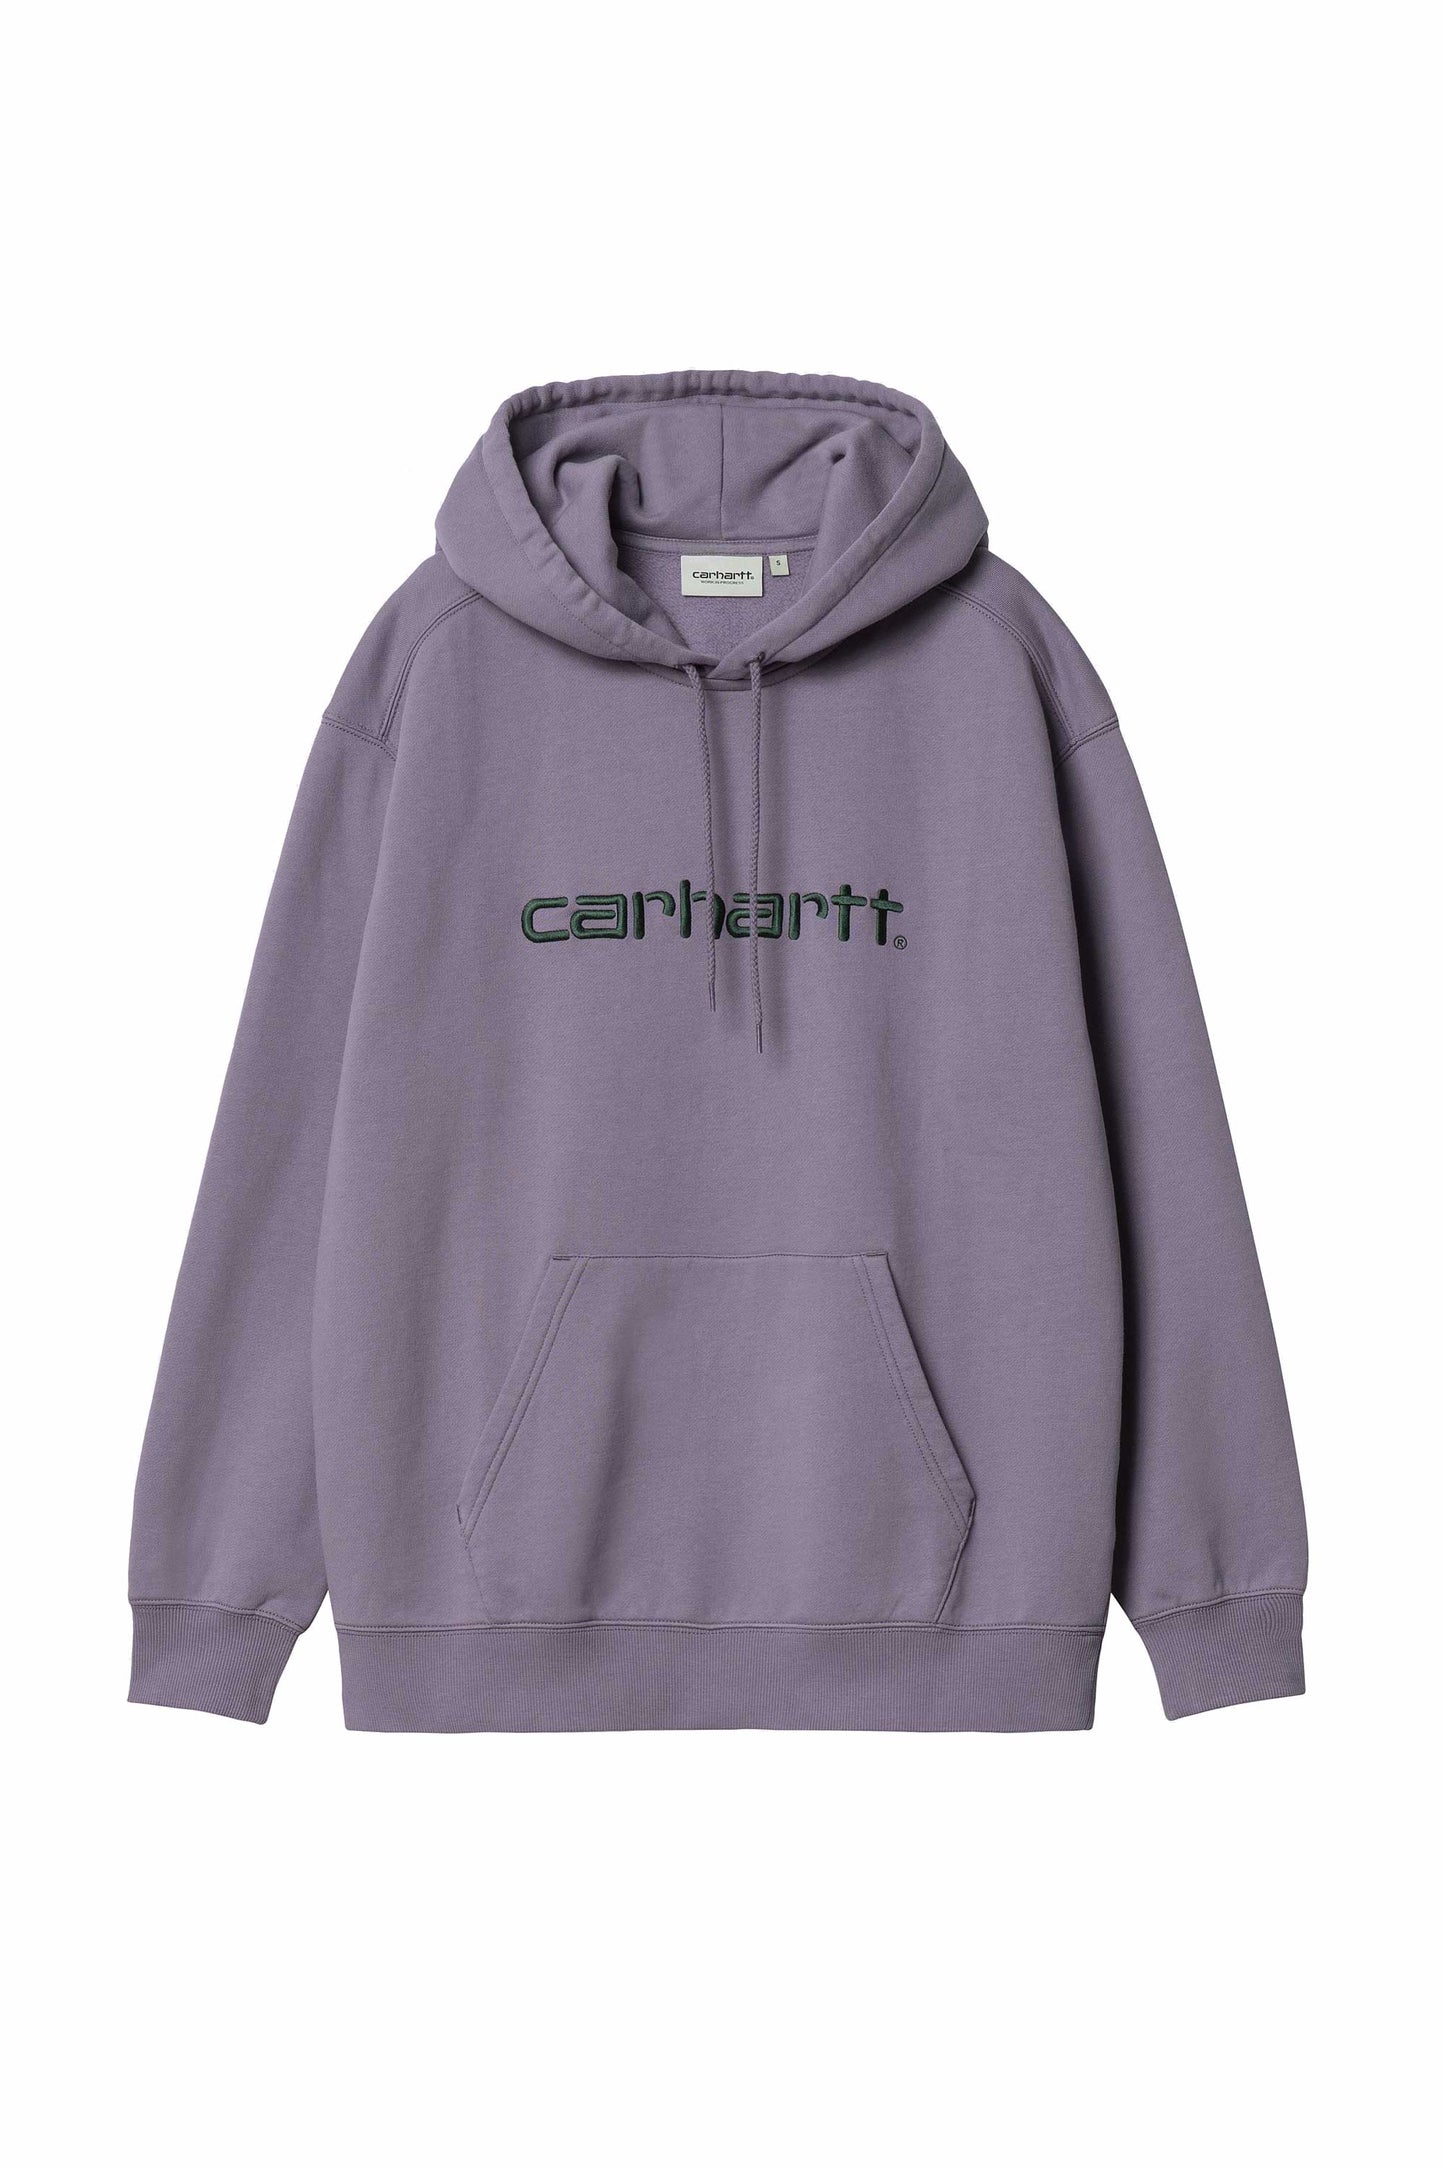 Pukas-Surf-Shop-carhartt-hoodie-sweatshirt-glassy-purple